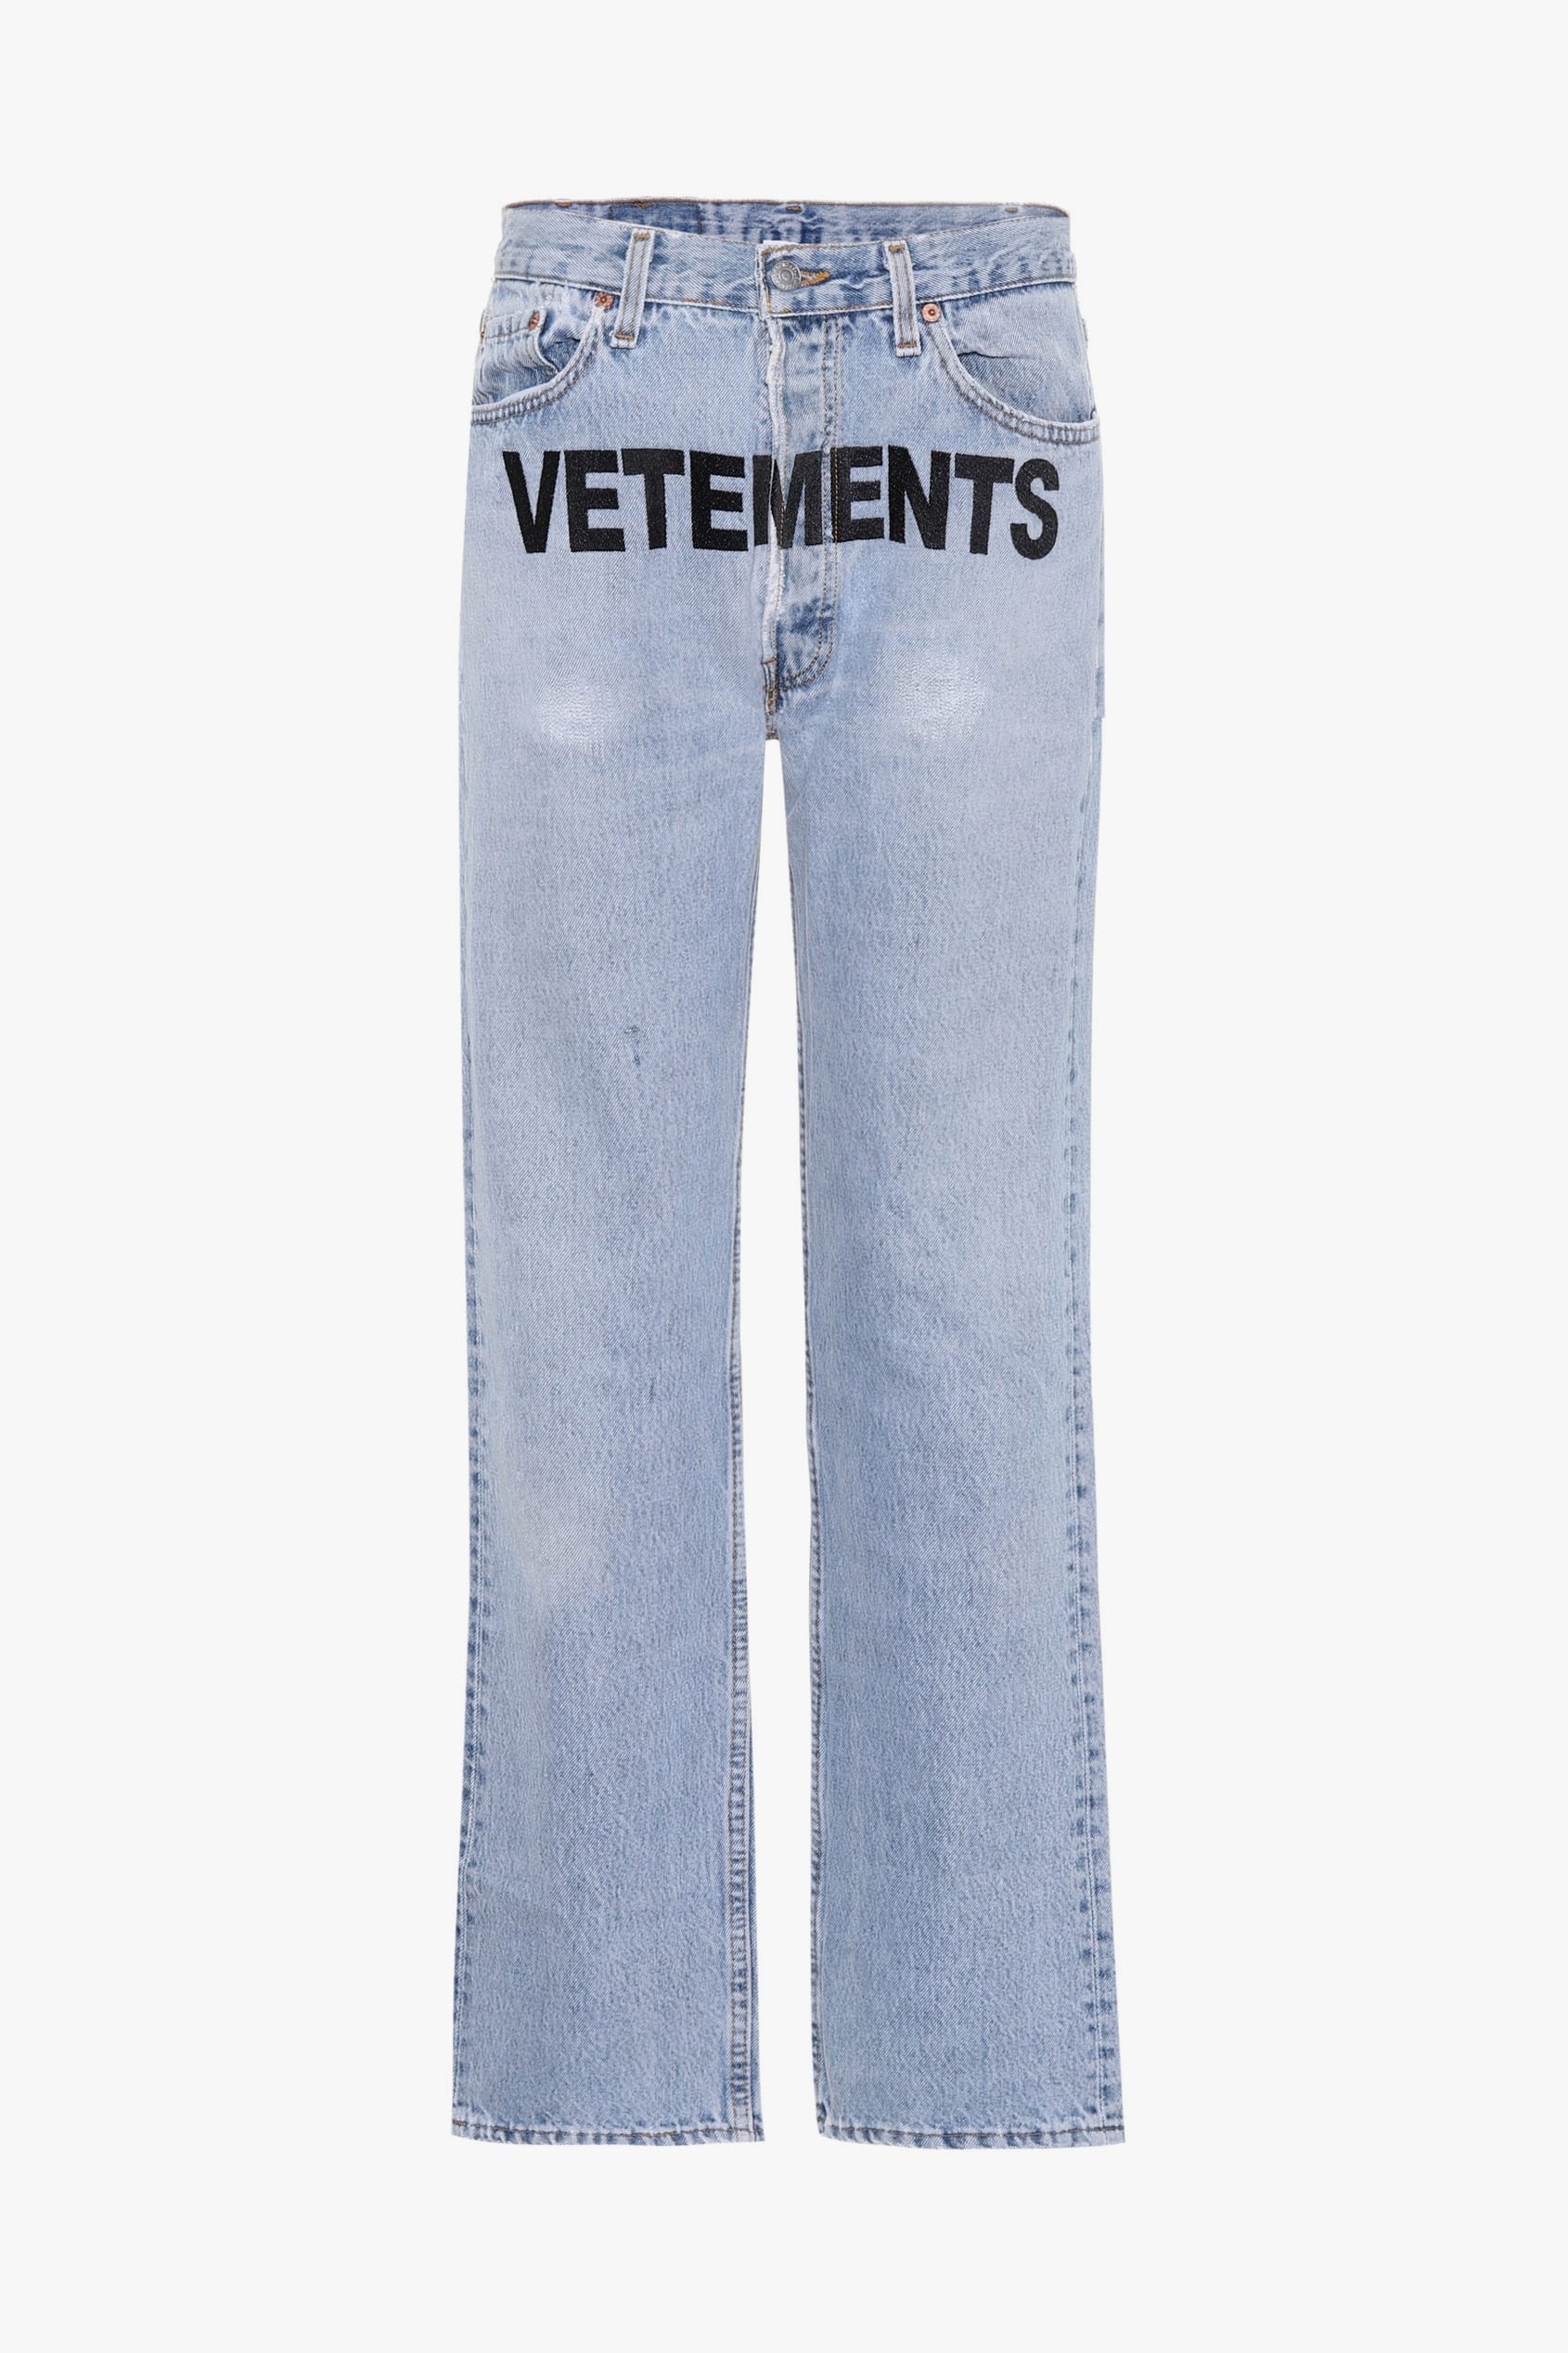 Introducir 85+ imagen vetements x levi's jeans - Thptnganamst.edu.vn